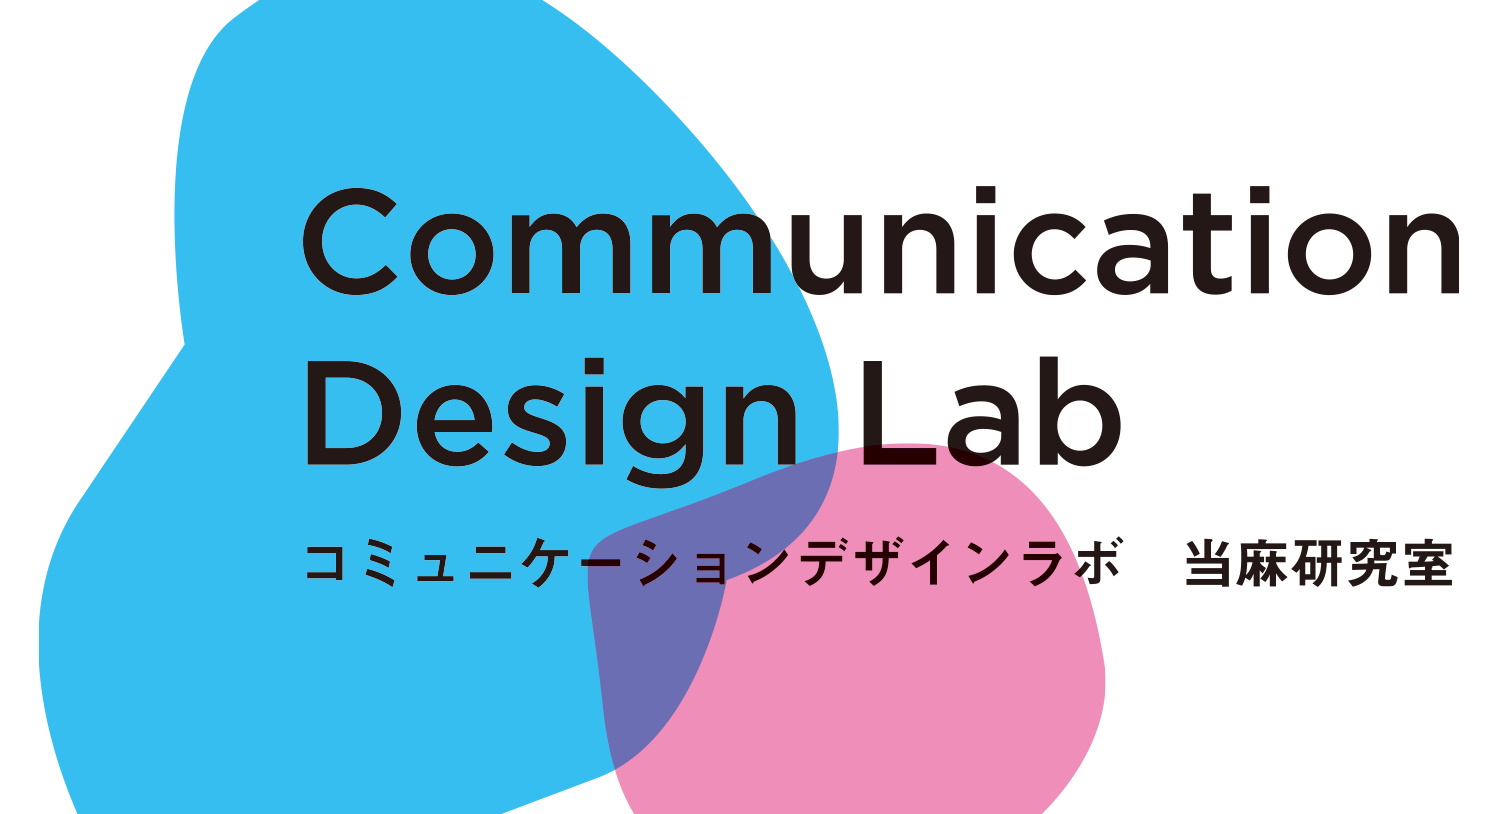 SDM Communication Design Laboratory